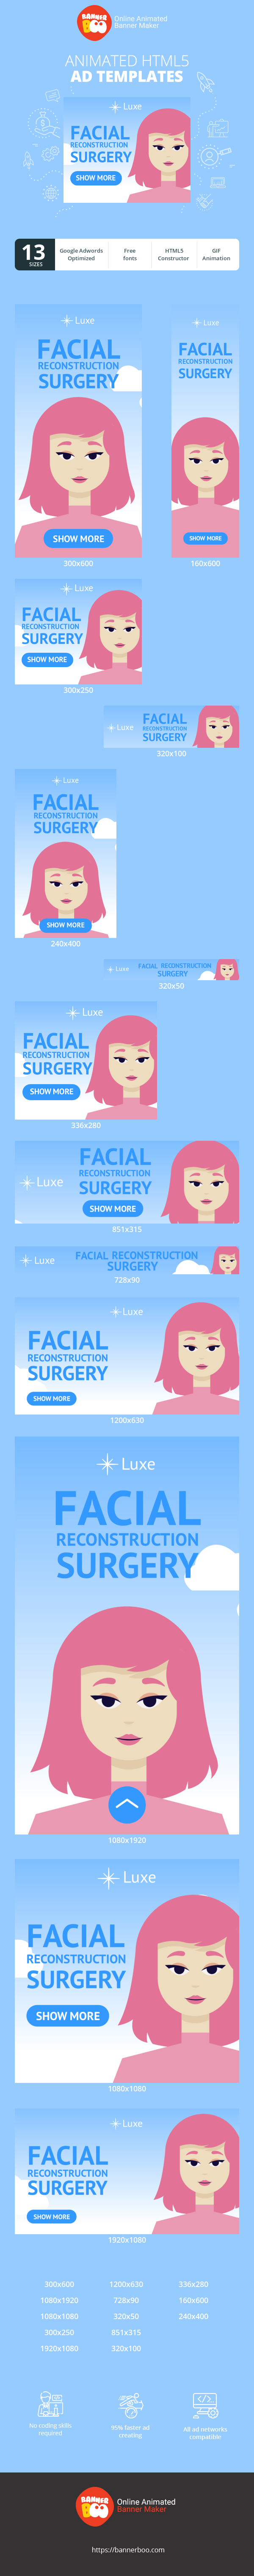 Banner ad template — Facial Reconstruction Surgery — Plastic Surgeon